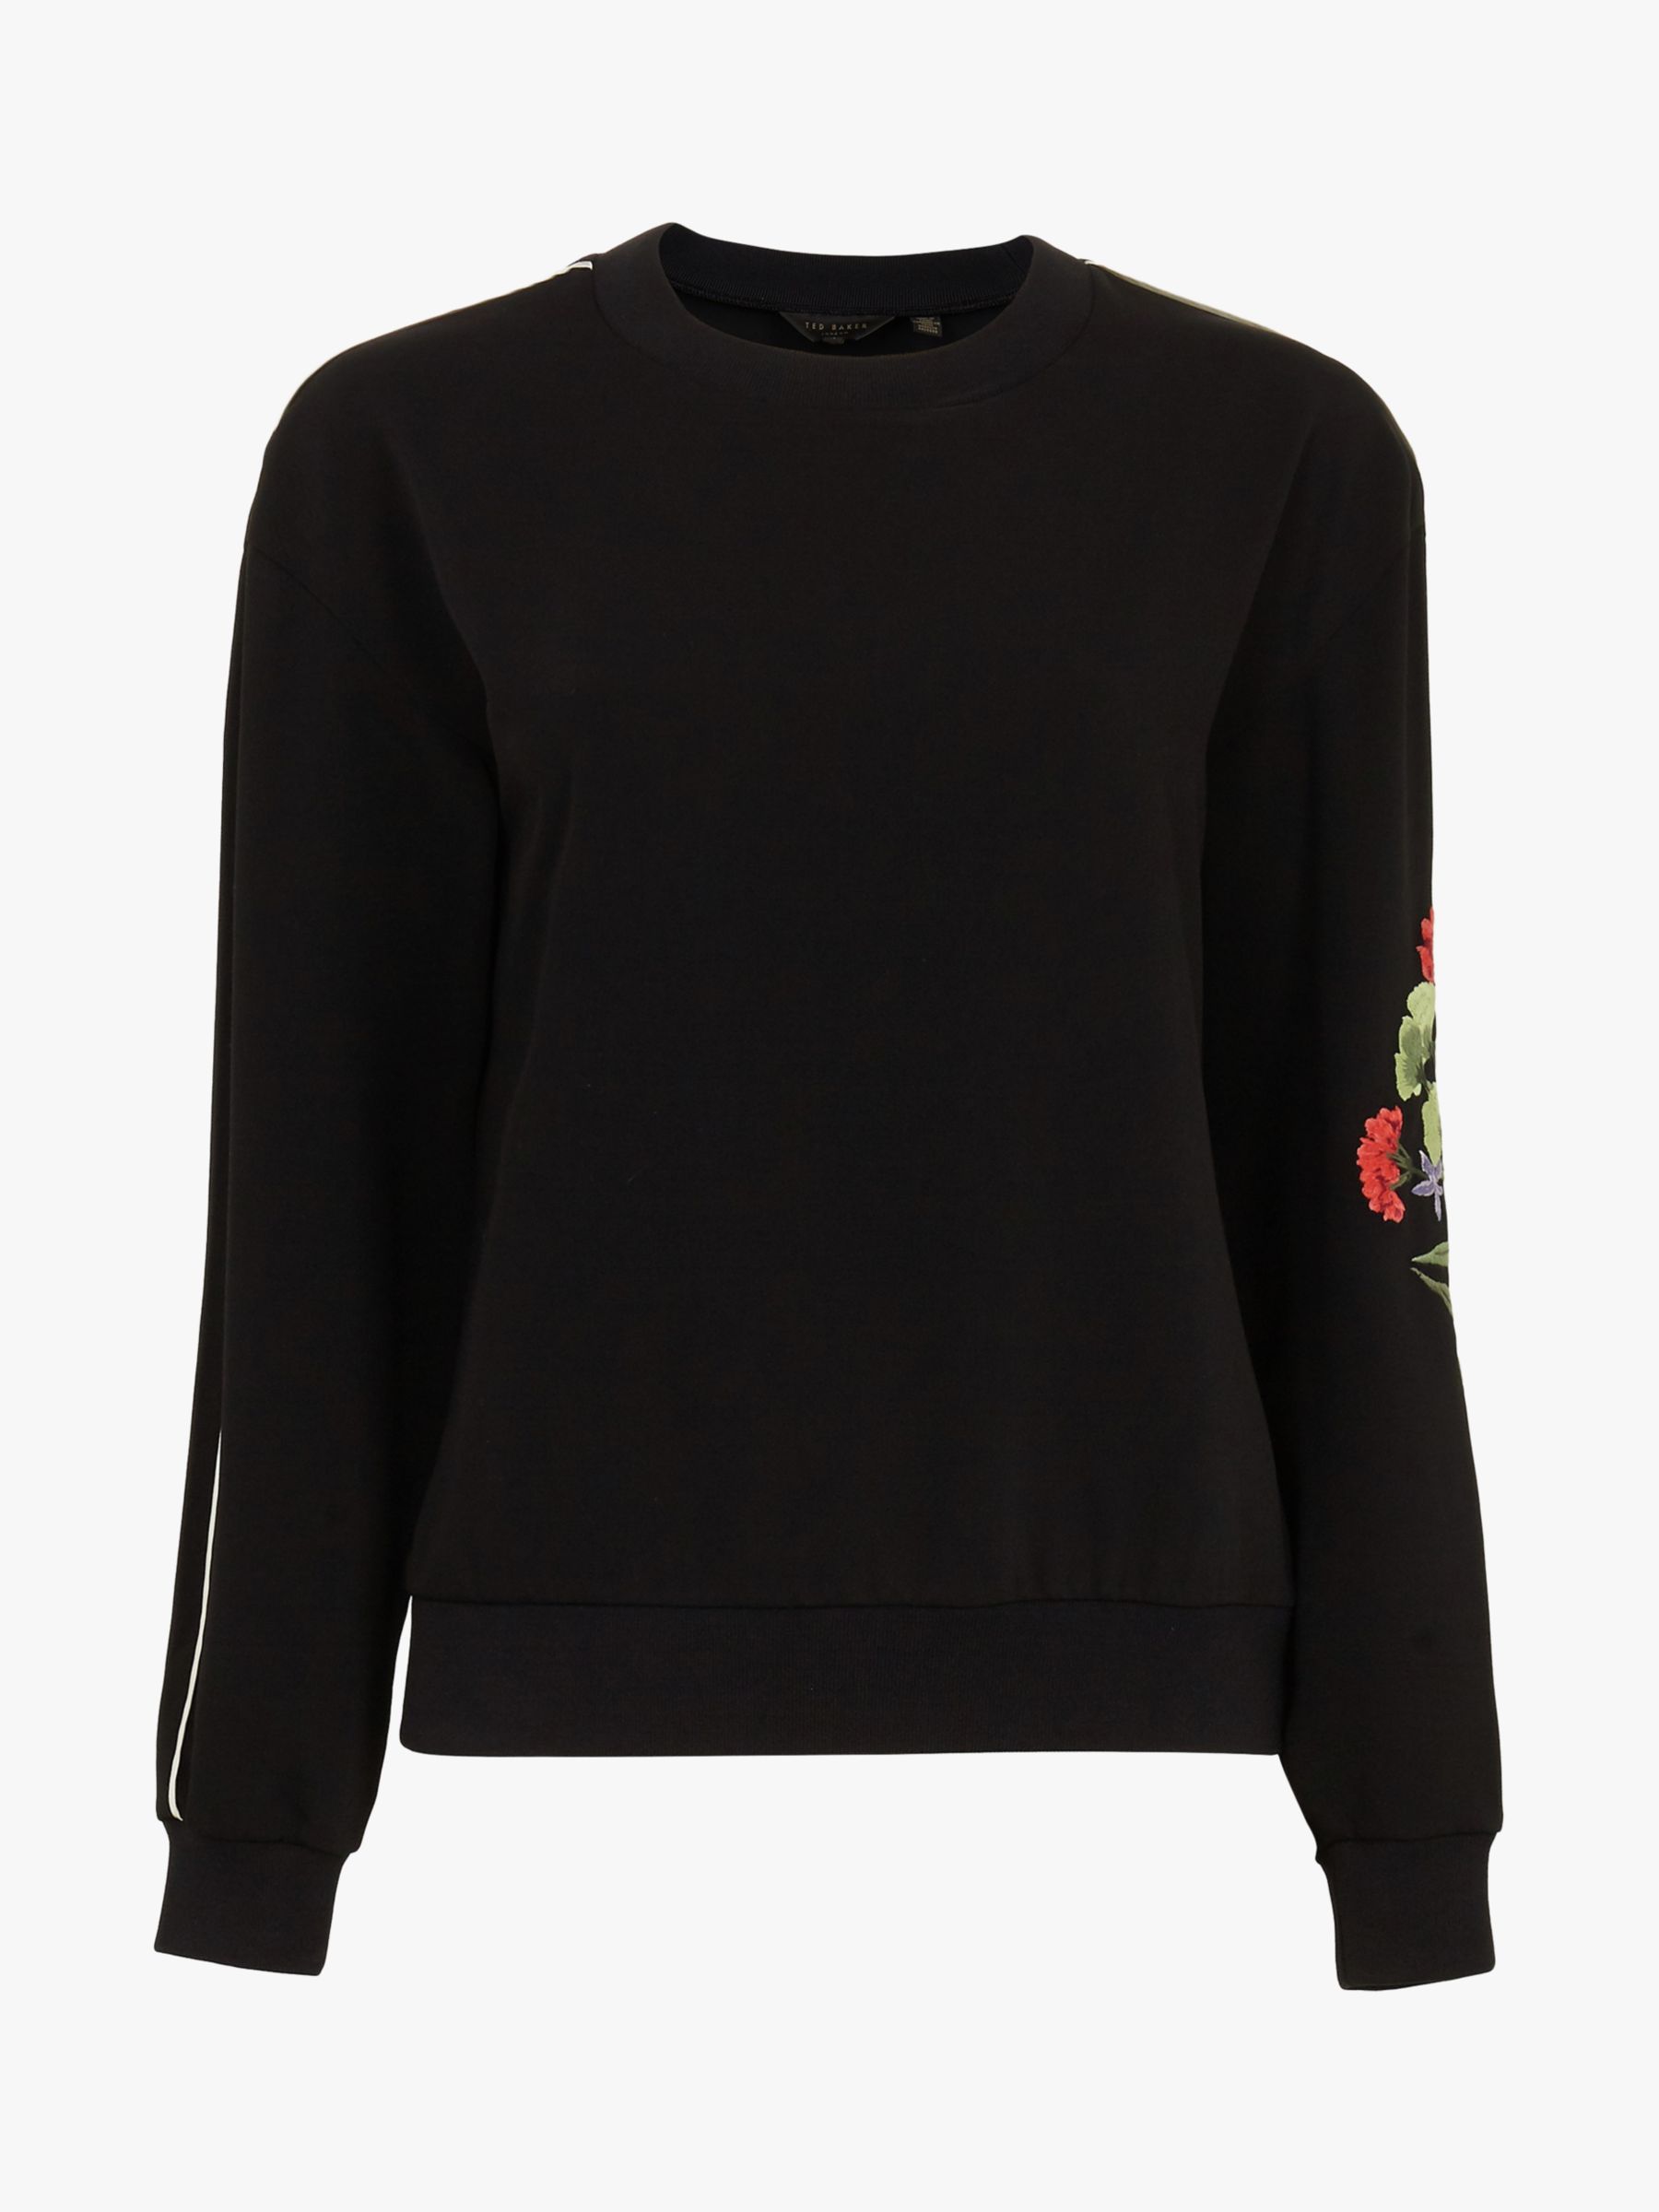 Ted Baker Krina Highland Embroidered Sweatshirt, Black at John Lewis ...